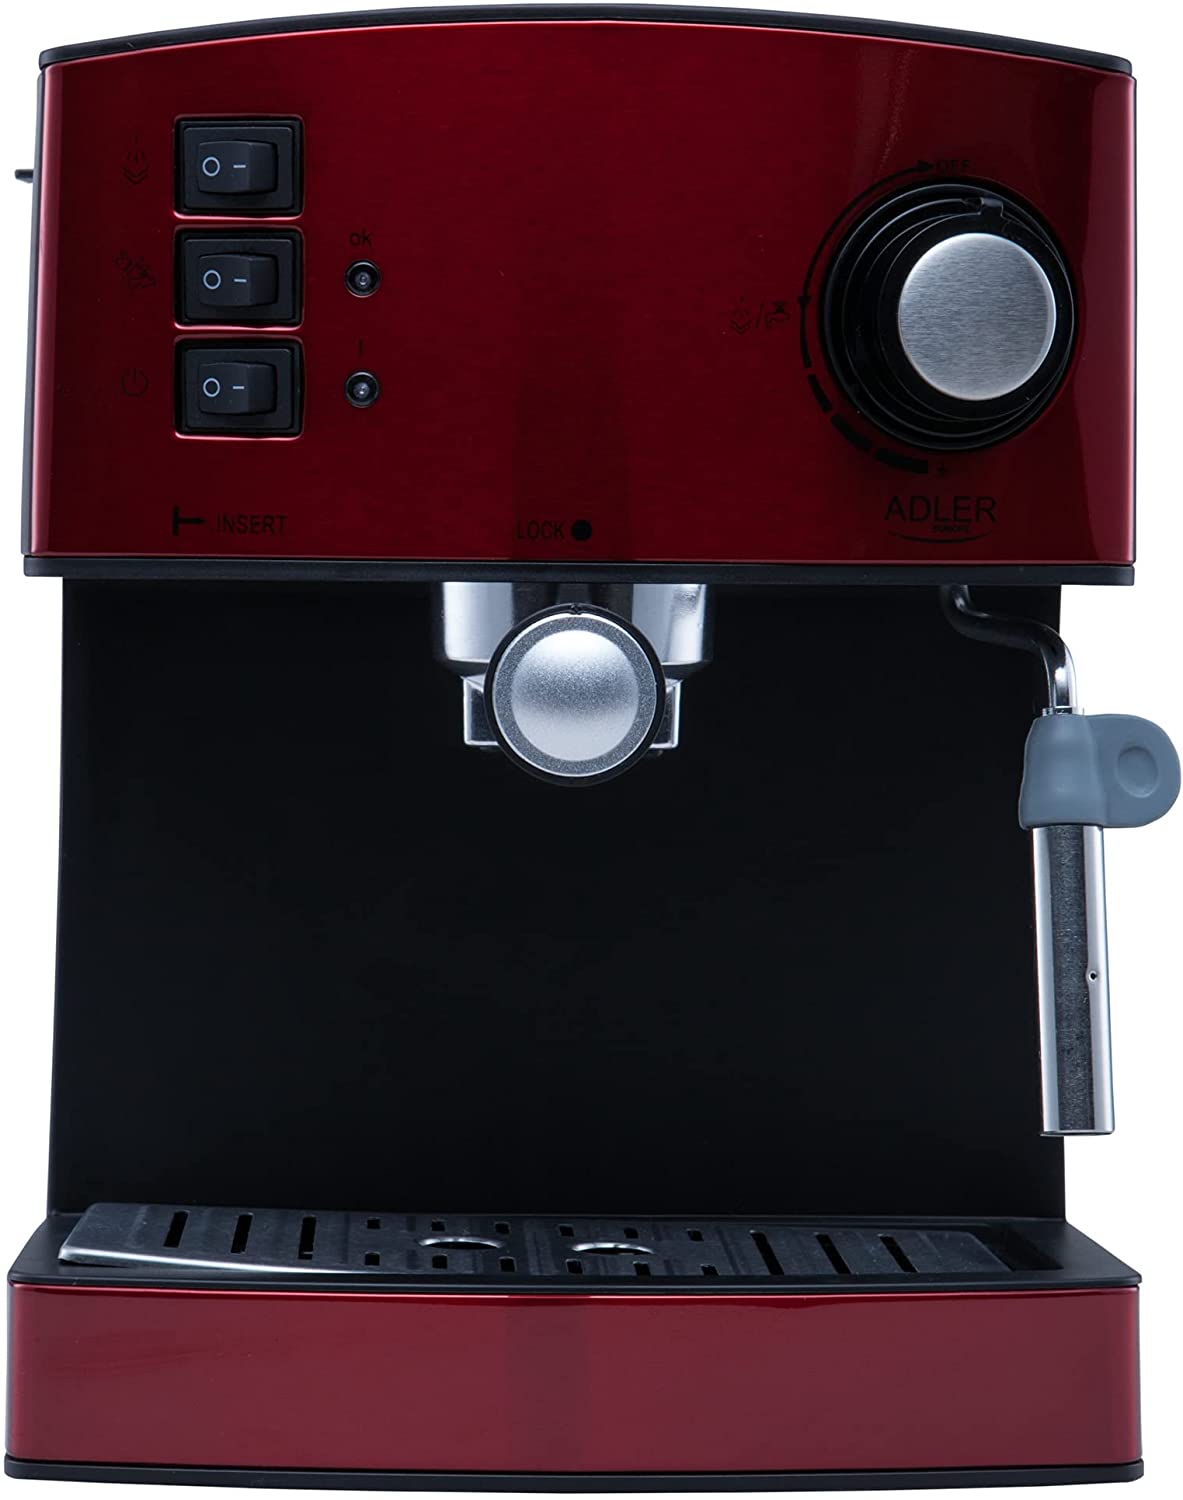 Adler AD 4404r Espresso Machine, Red